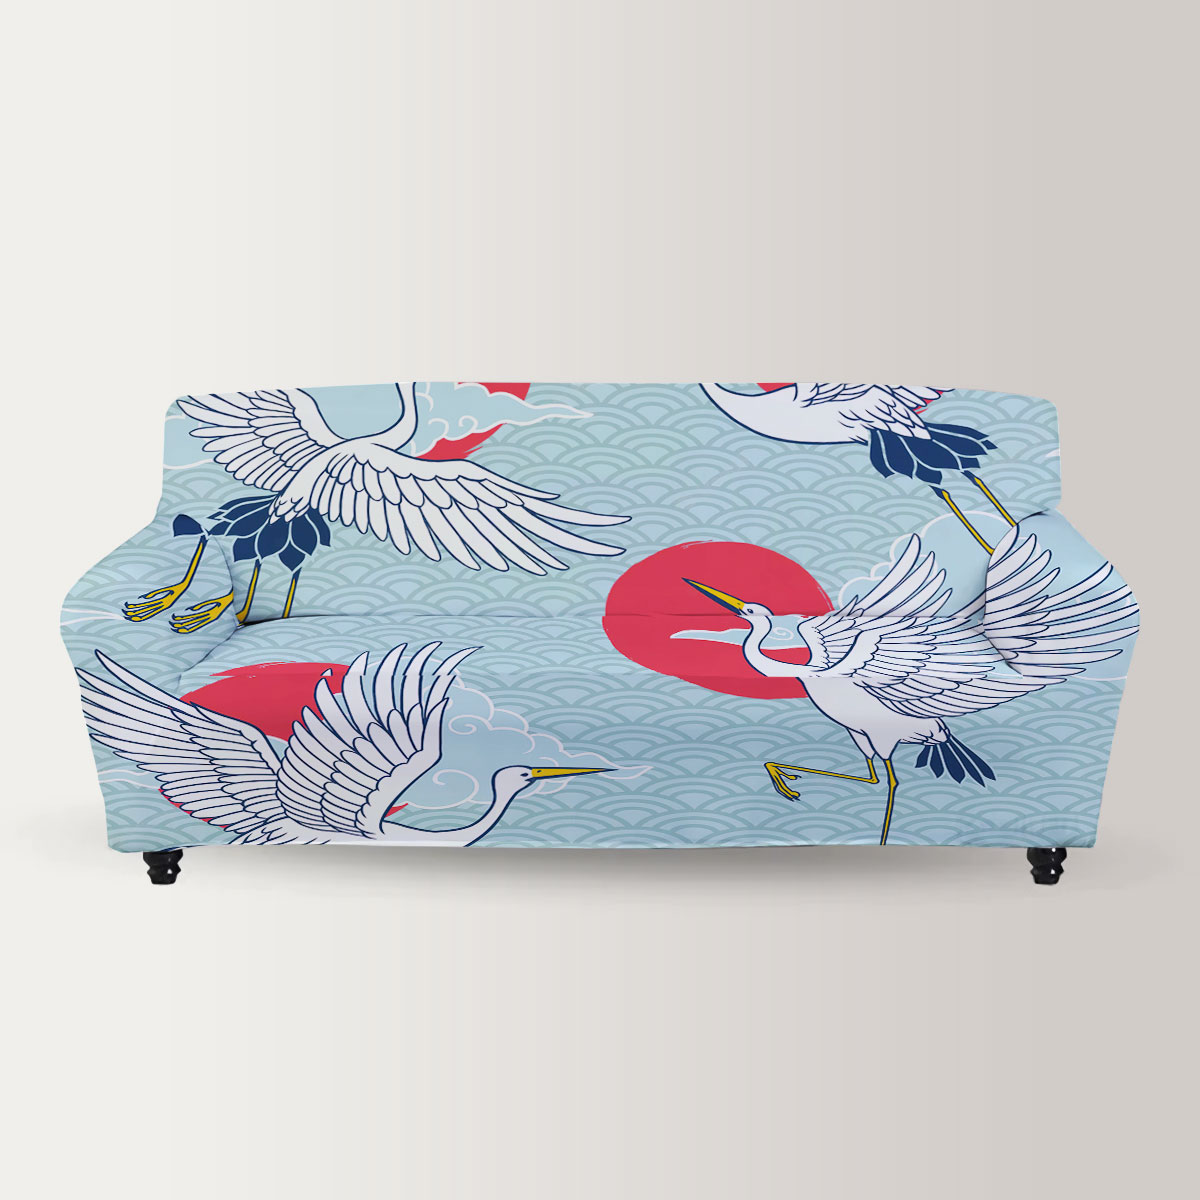 Iconic Flying Heron Art Sofa Cover